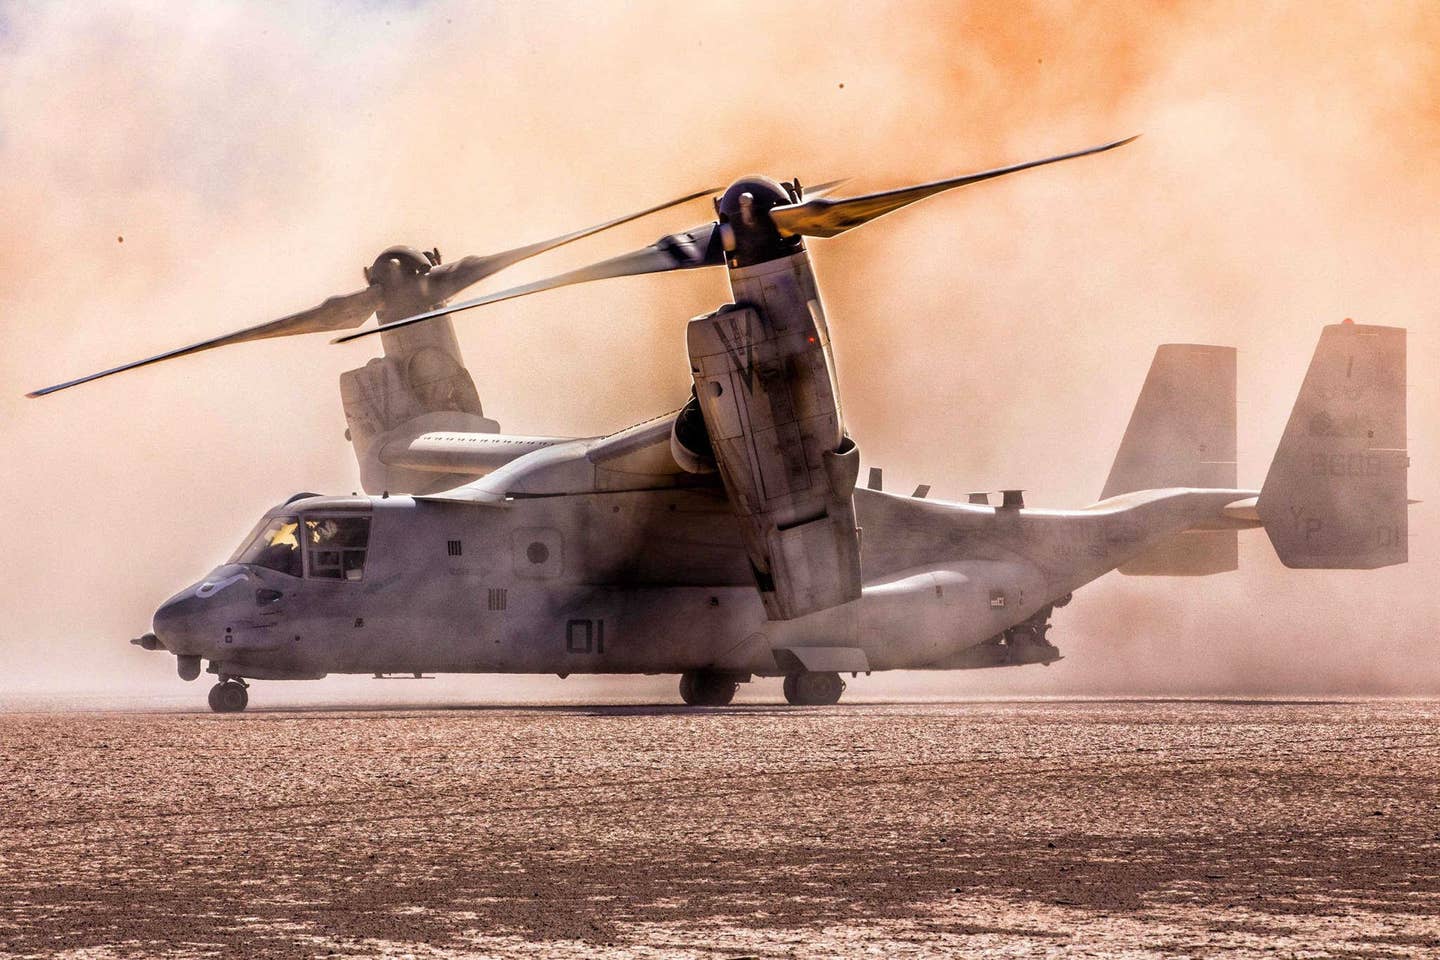 A Marine Corps MV-22 lands in the desert. (U.S. Marine Corps photo by Lance Cpl. Brandon Maldonado)